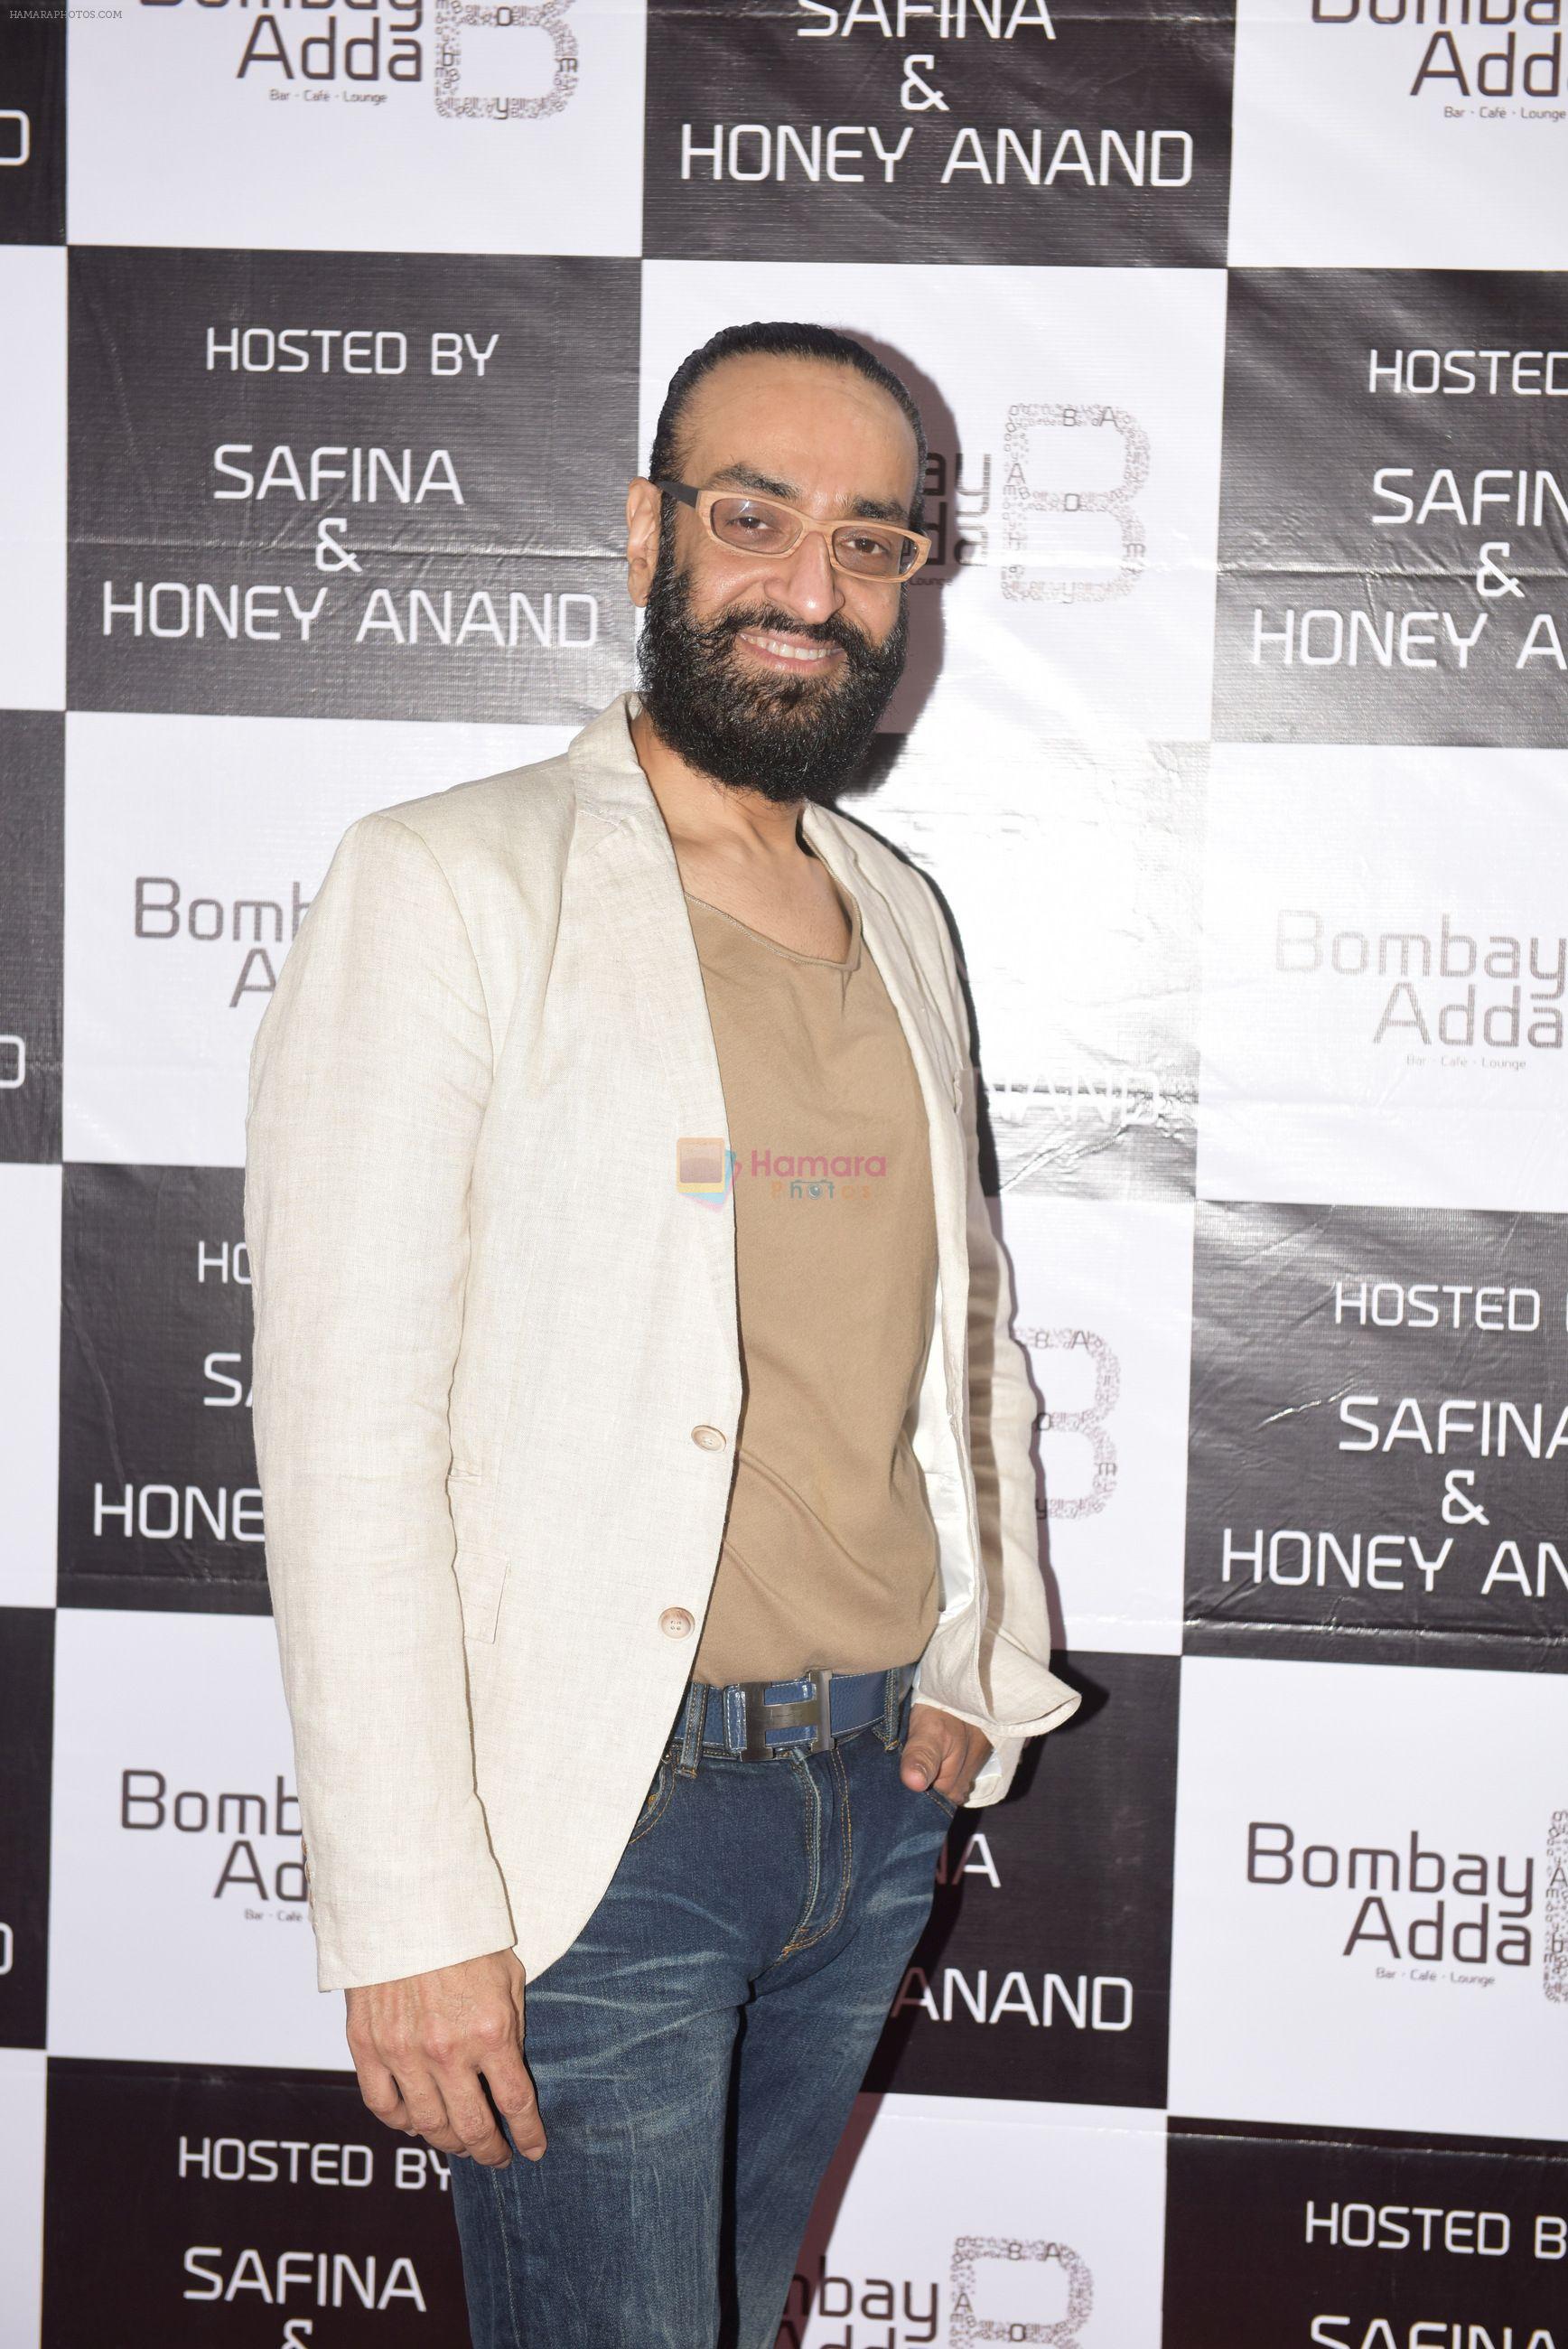 Honey Anand hosting at Bombay Adda on 23rd July 2017